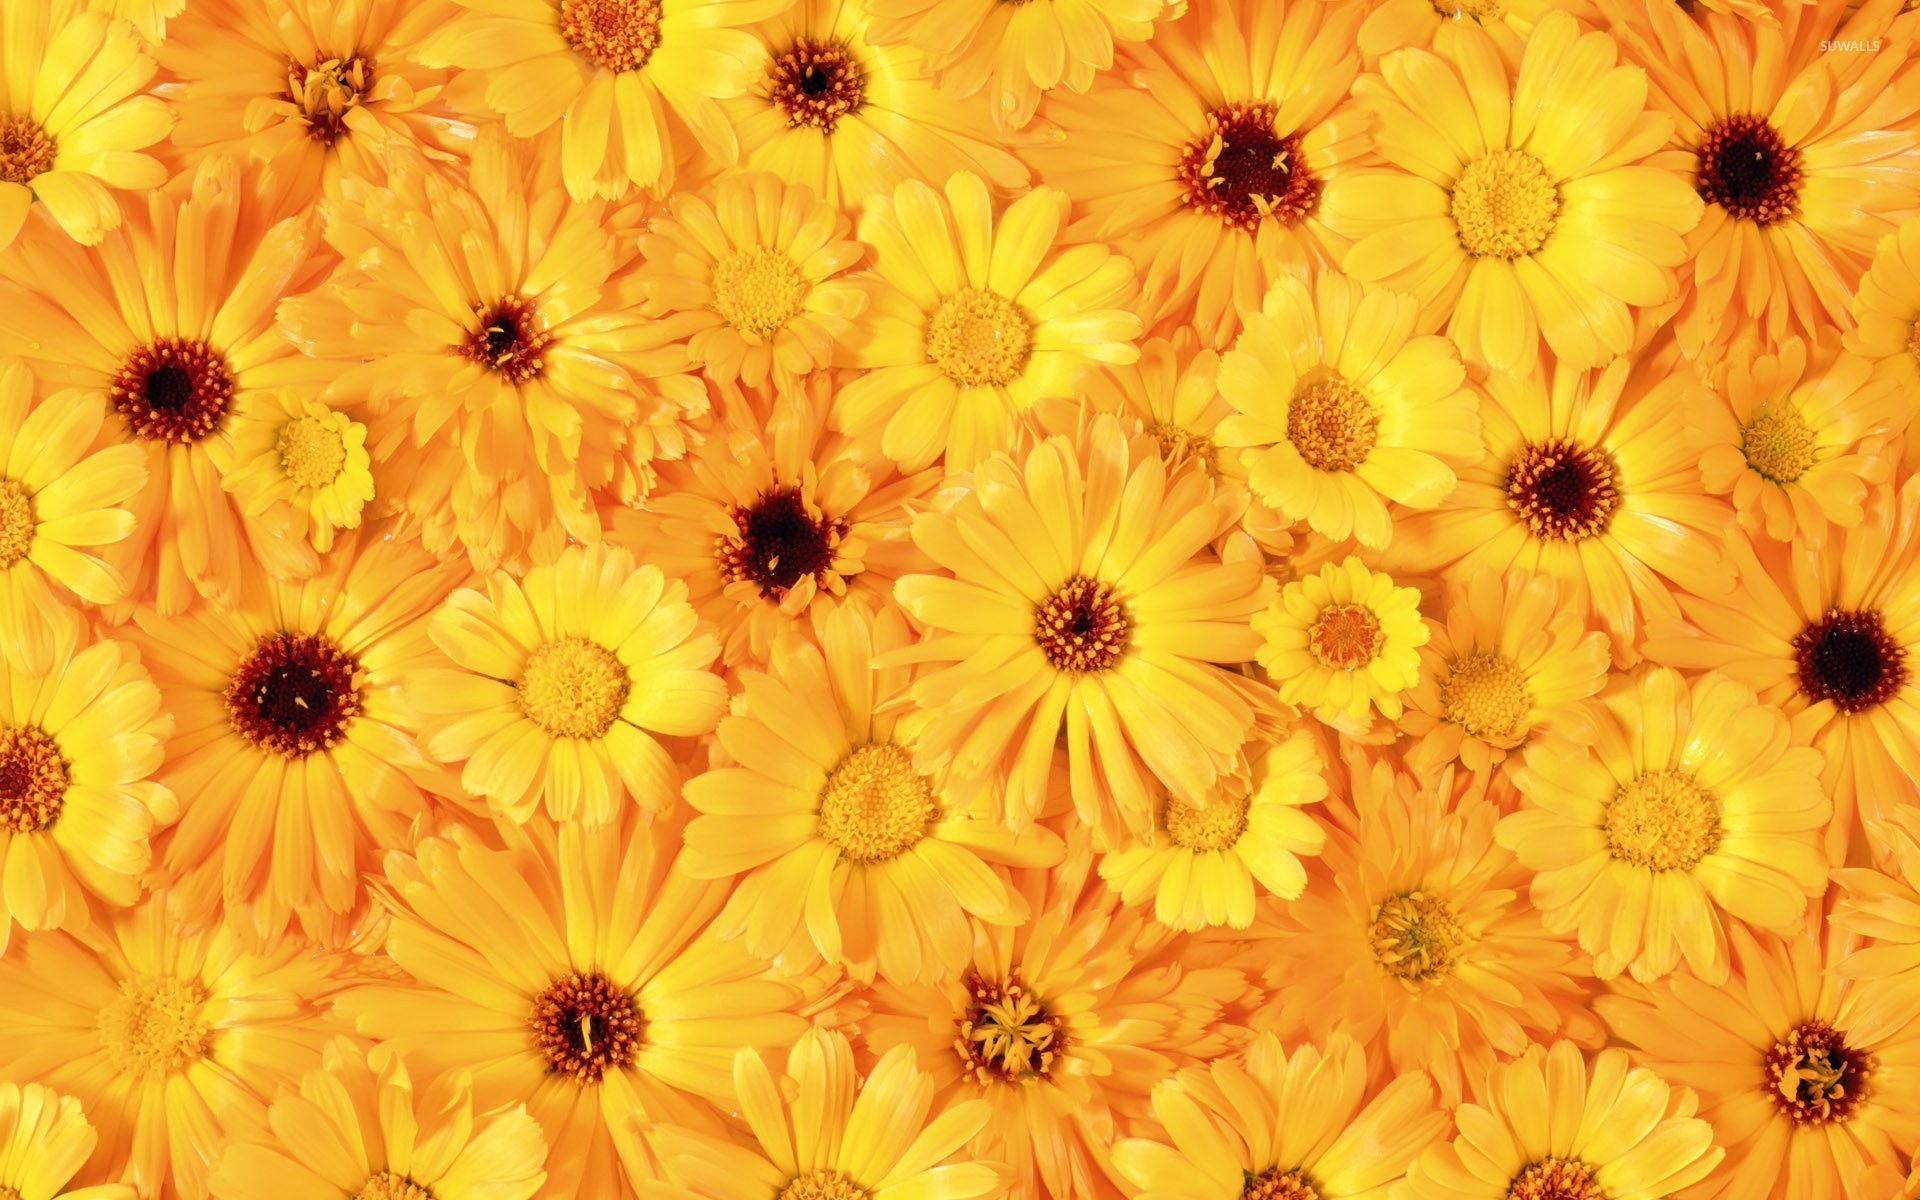 Yellow daisies wallpaper - Flower wallpapers - #54402